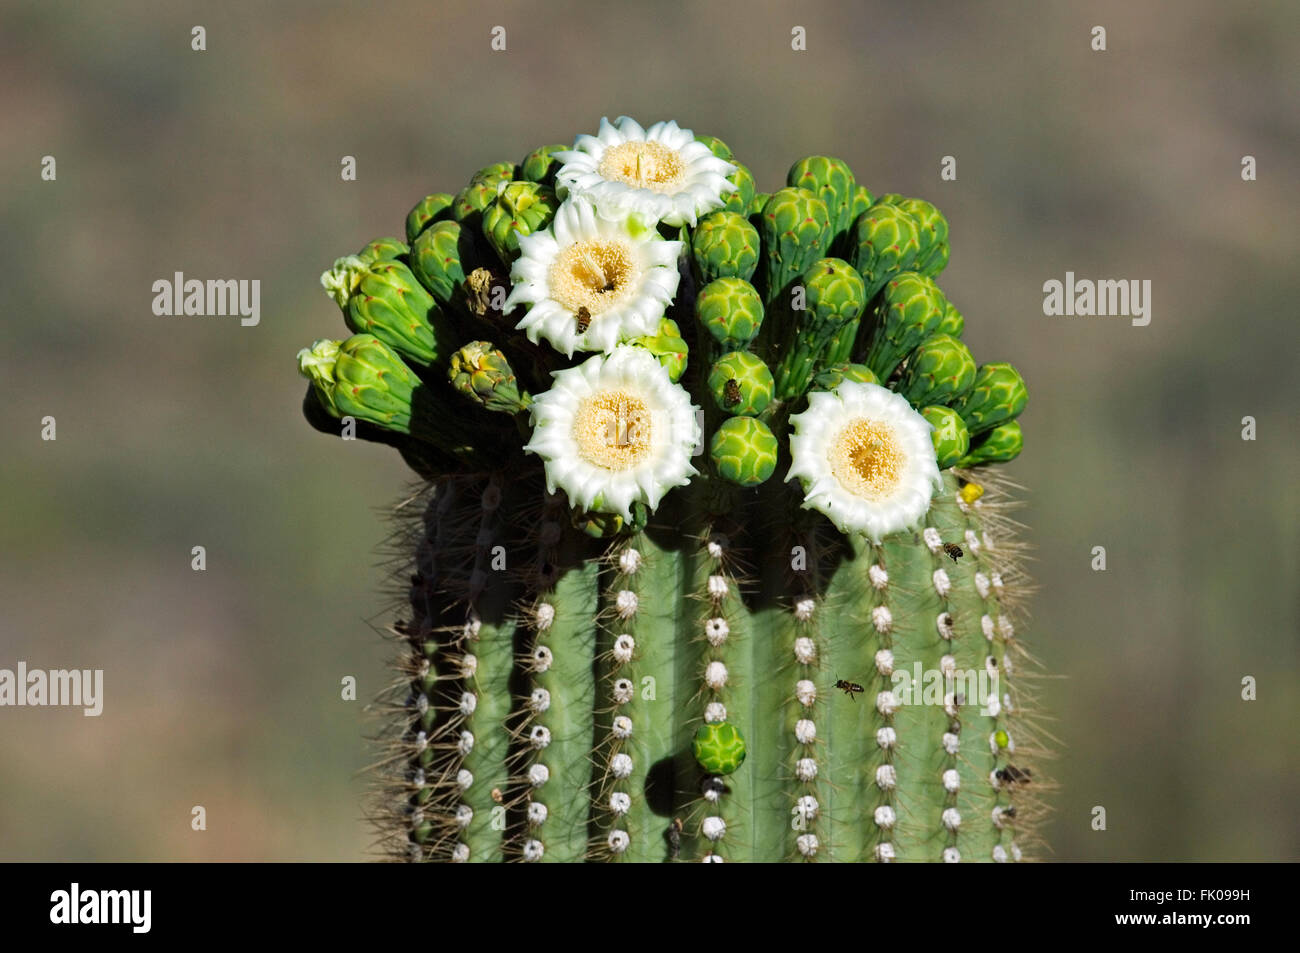 Saguaro cactus (Carnegiea gigantea / Cereus giganteus) blooming, showing buds and bees pollinating white flowers, Arizona, USA Stock Photo